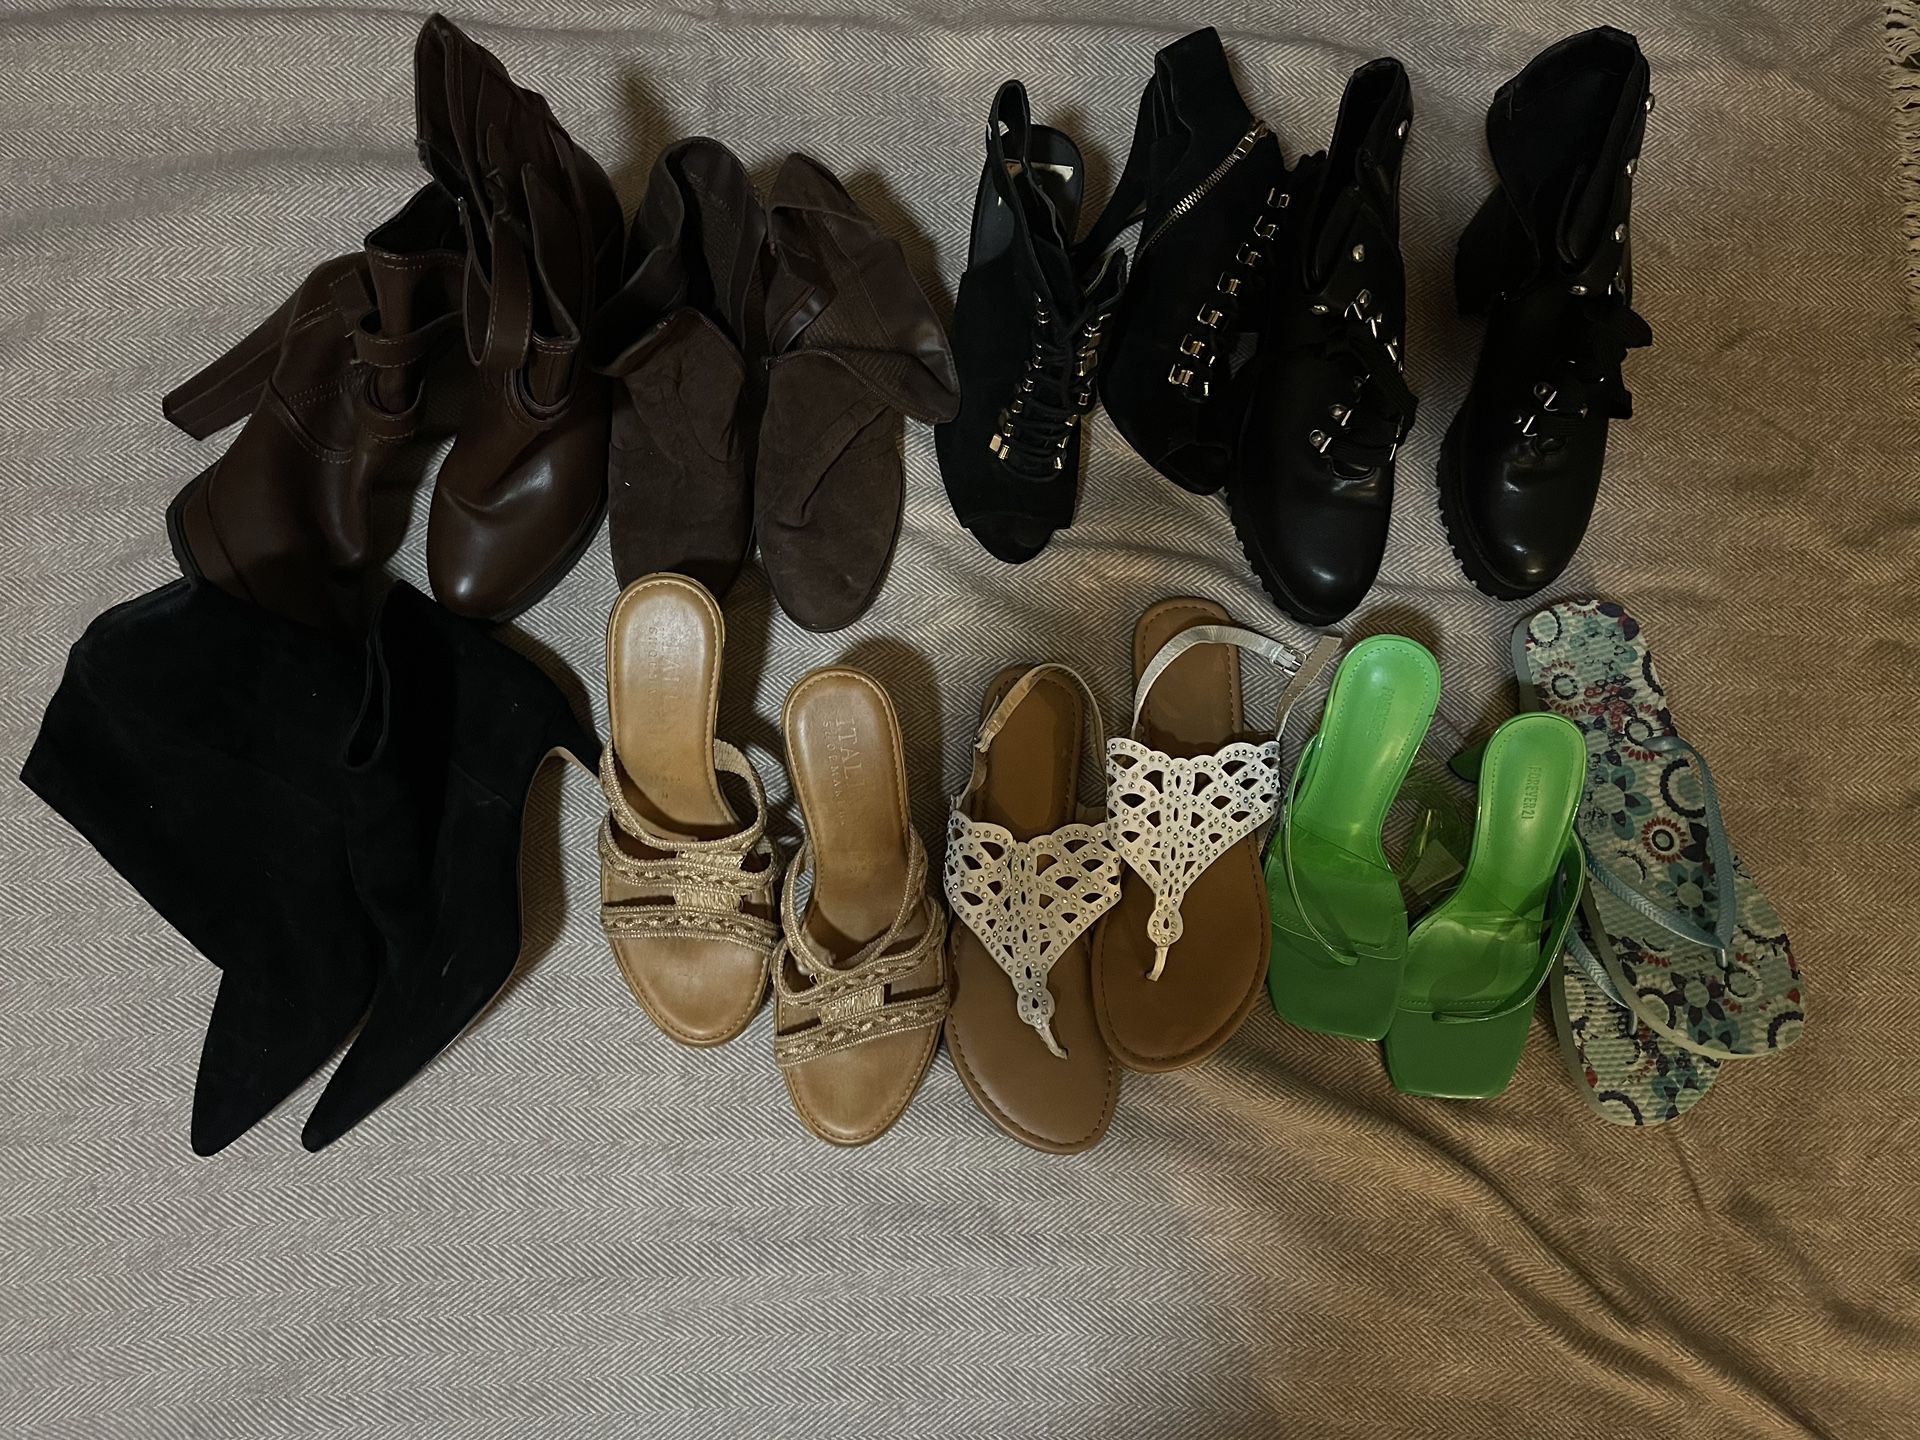 LOT 9 Pair Of Shoes / Booties Sandals Size 6.5-9 Schuh Jcrew Etc